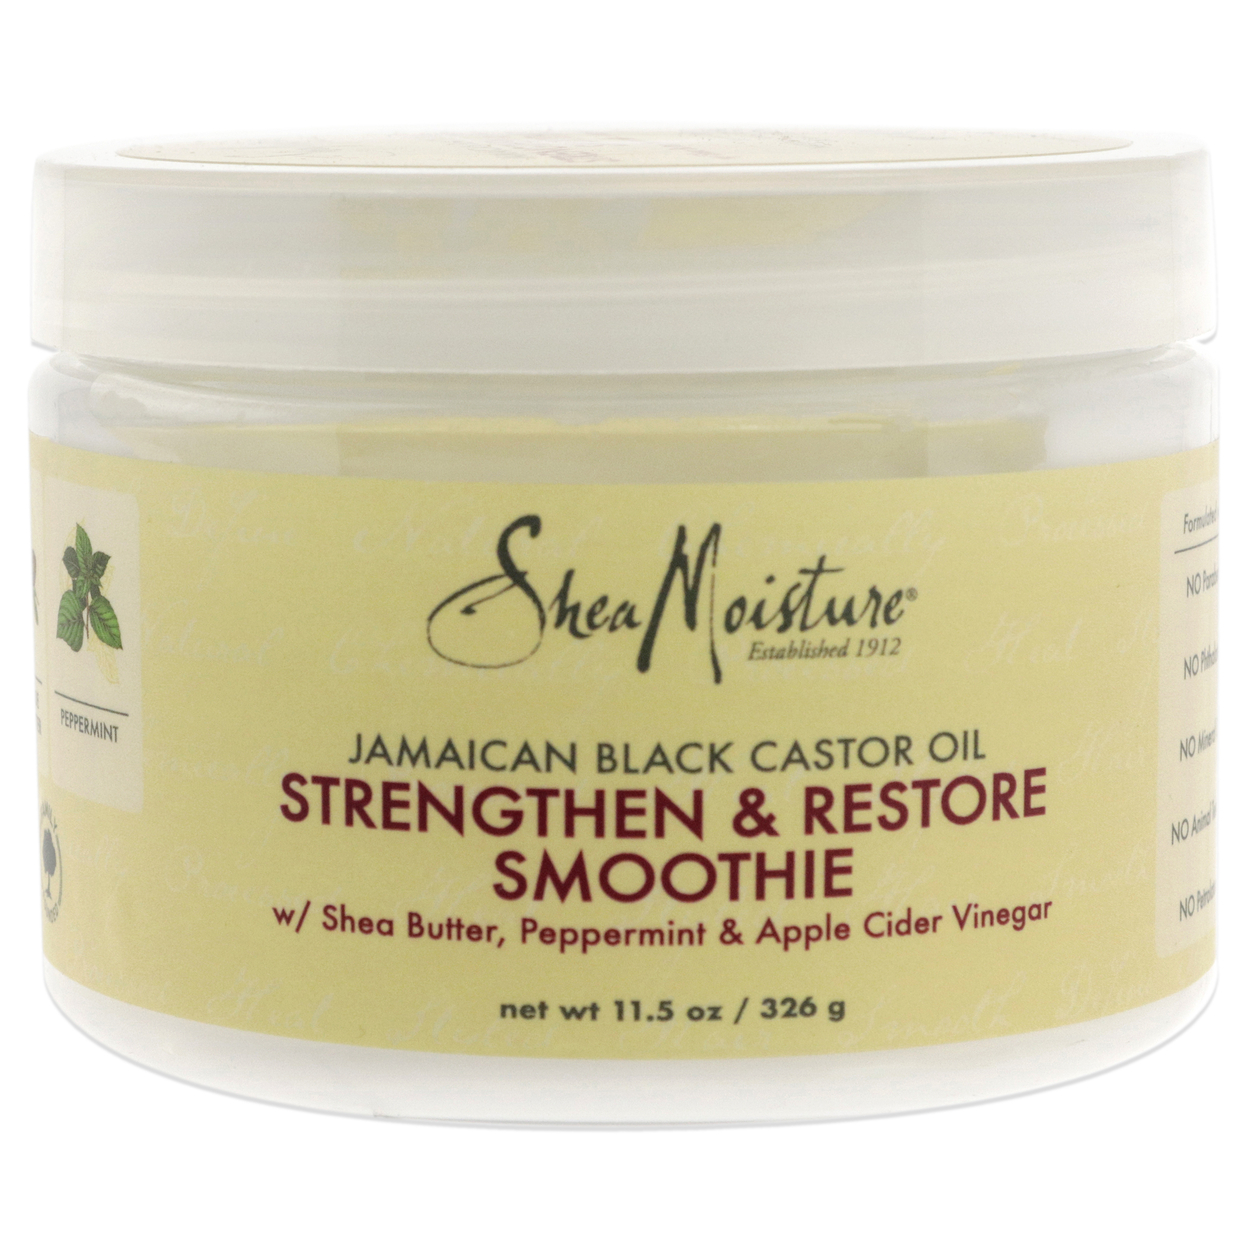 Shea Moisture Jamaican Black Castor Oil Strengthen And Restore Smoothie Cream Moisturizer 11.5 Oz